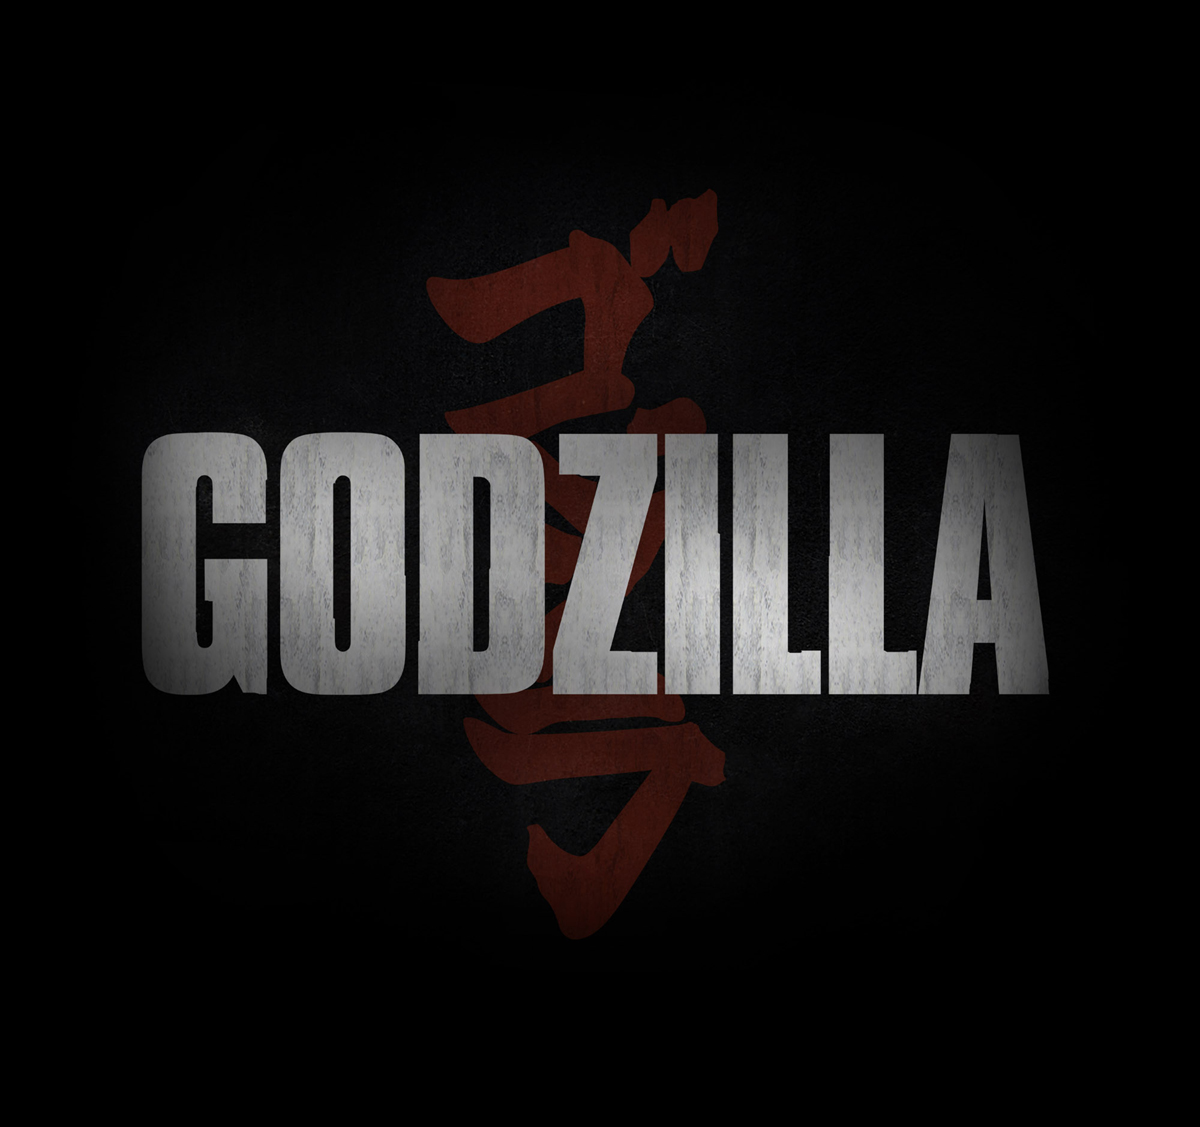 More Godzilla Set Pictures